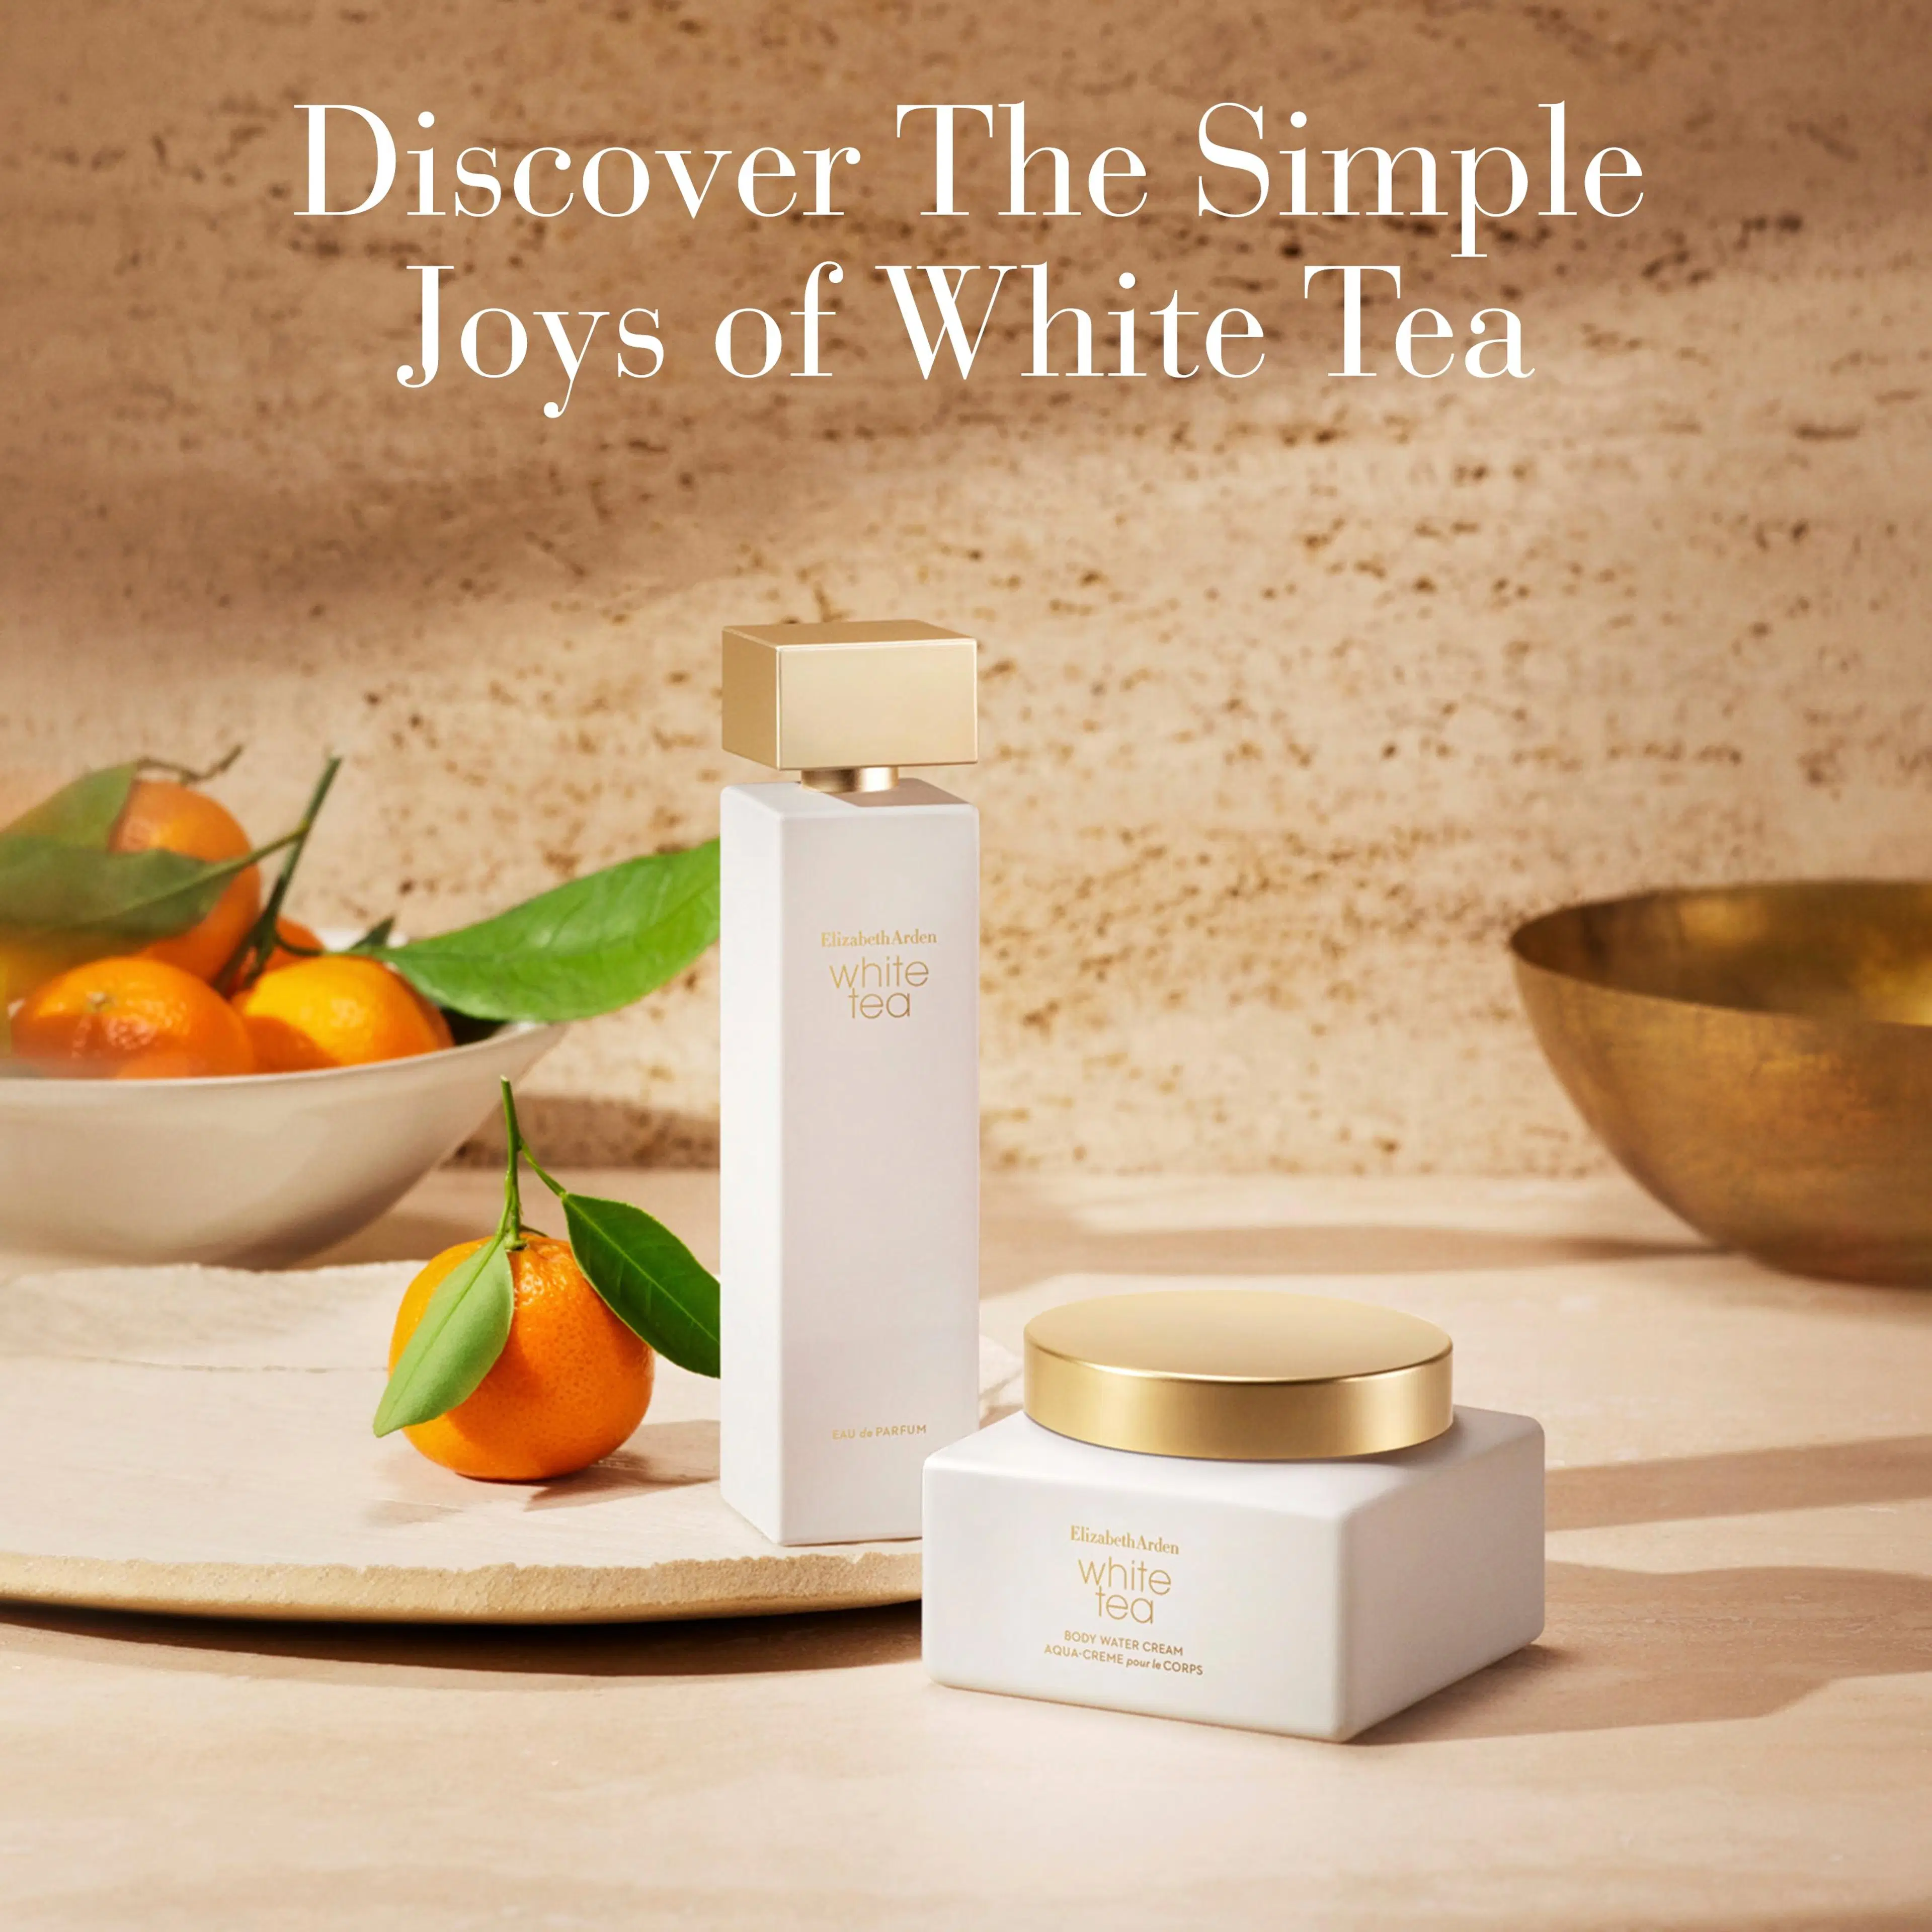 Elizabeth Arden White Tea Body Cream Luxe vartalovoide 225 ml